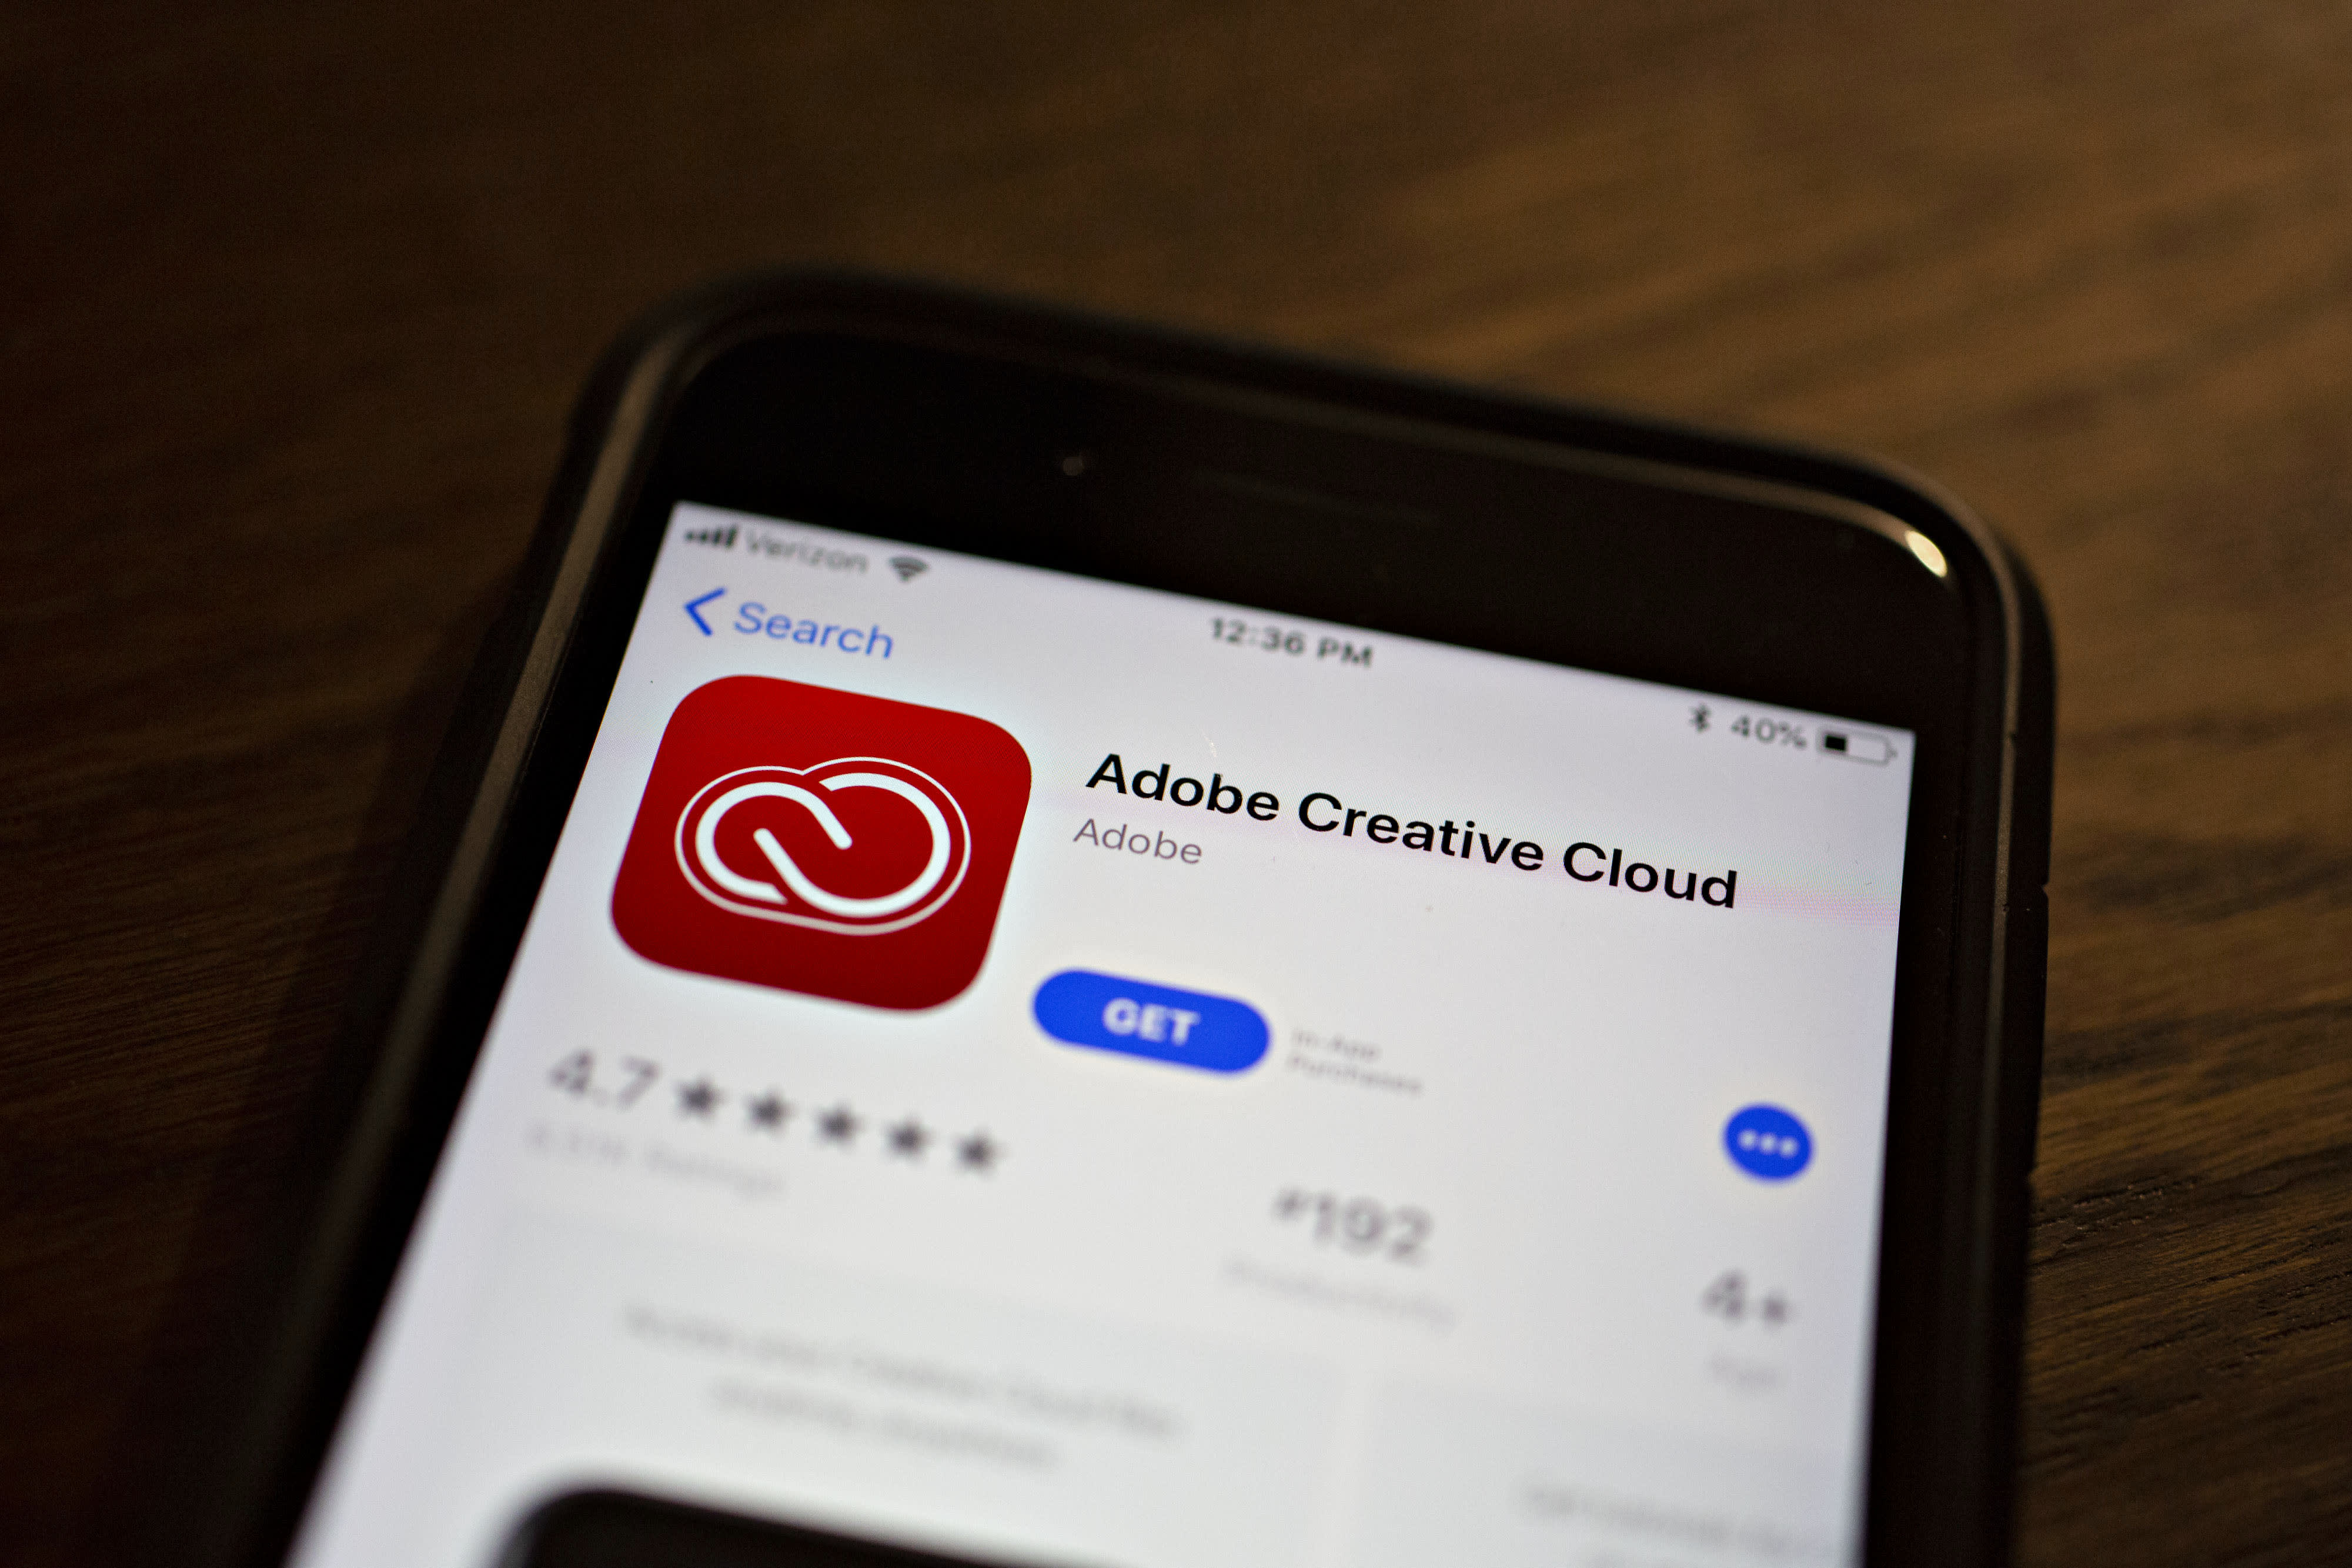 Adobe Creative Cloud Comparison Chart